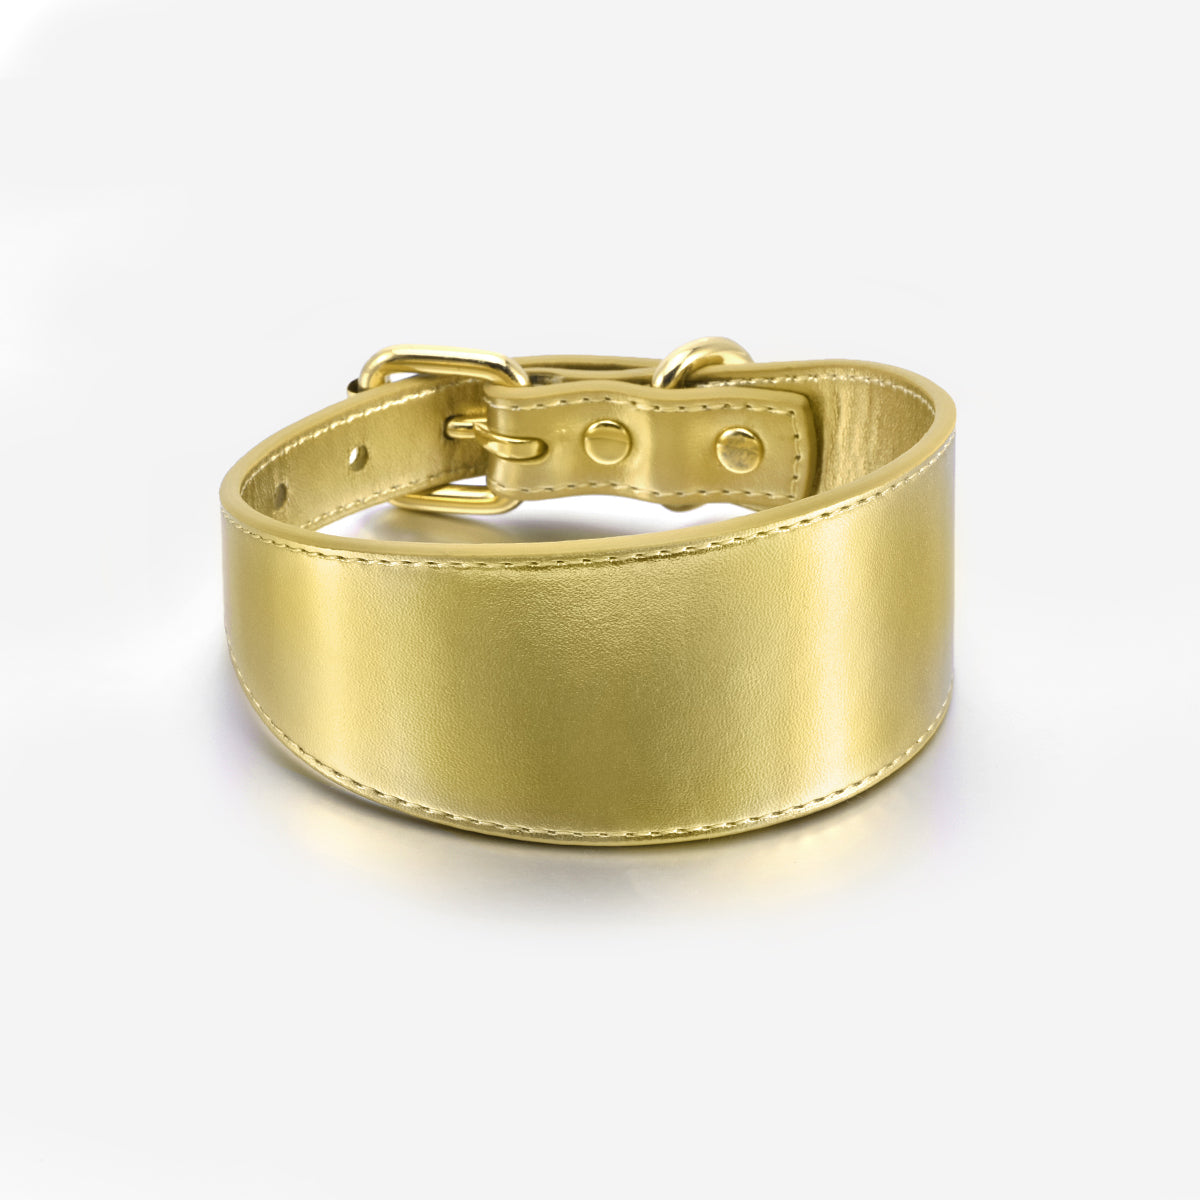 gold-metallic-dog-collar-medium-wide.jpg